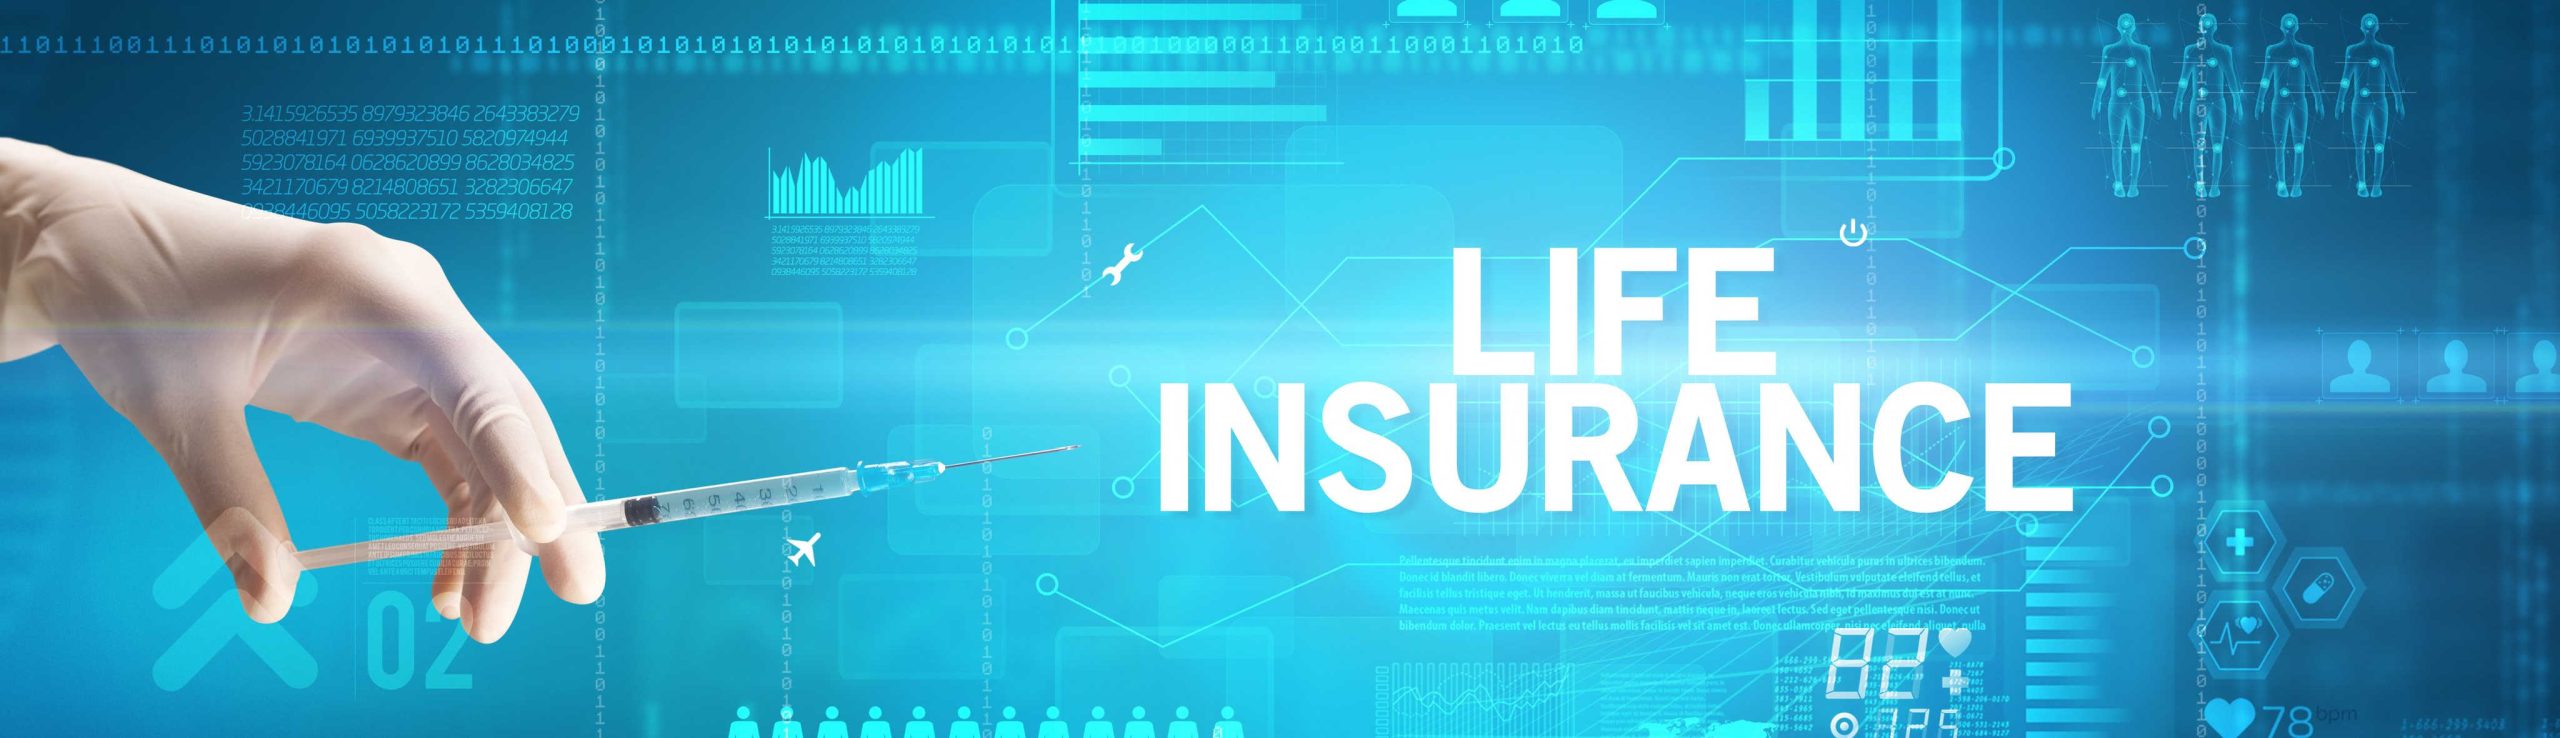 image of life insurance test